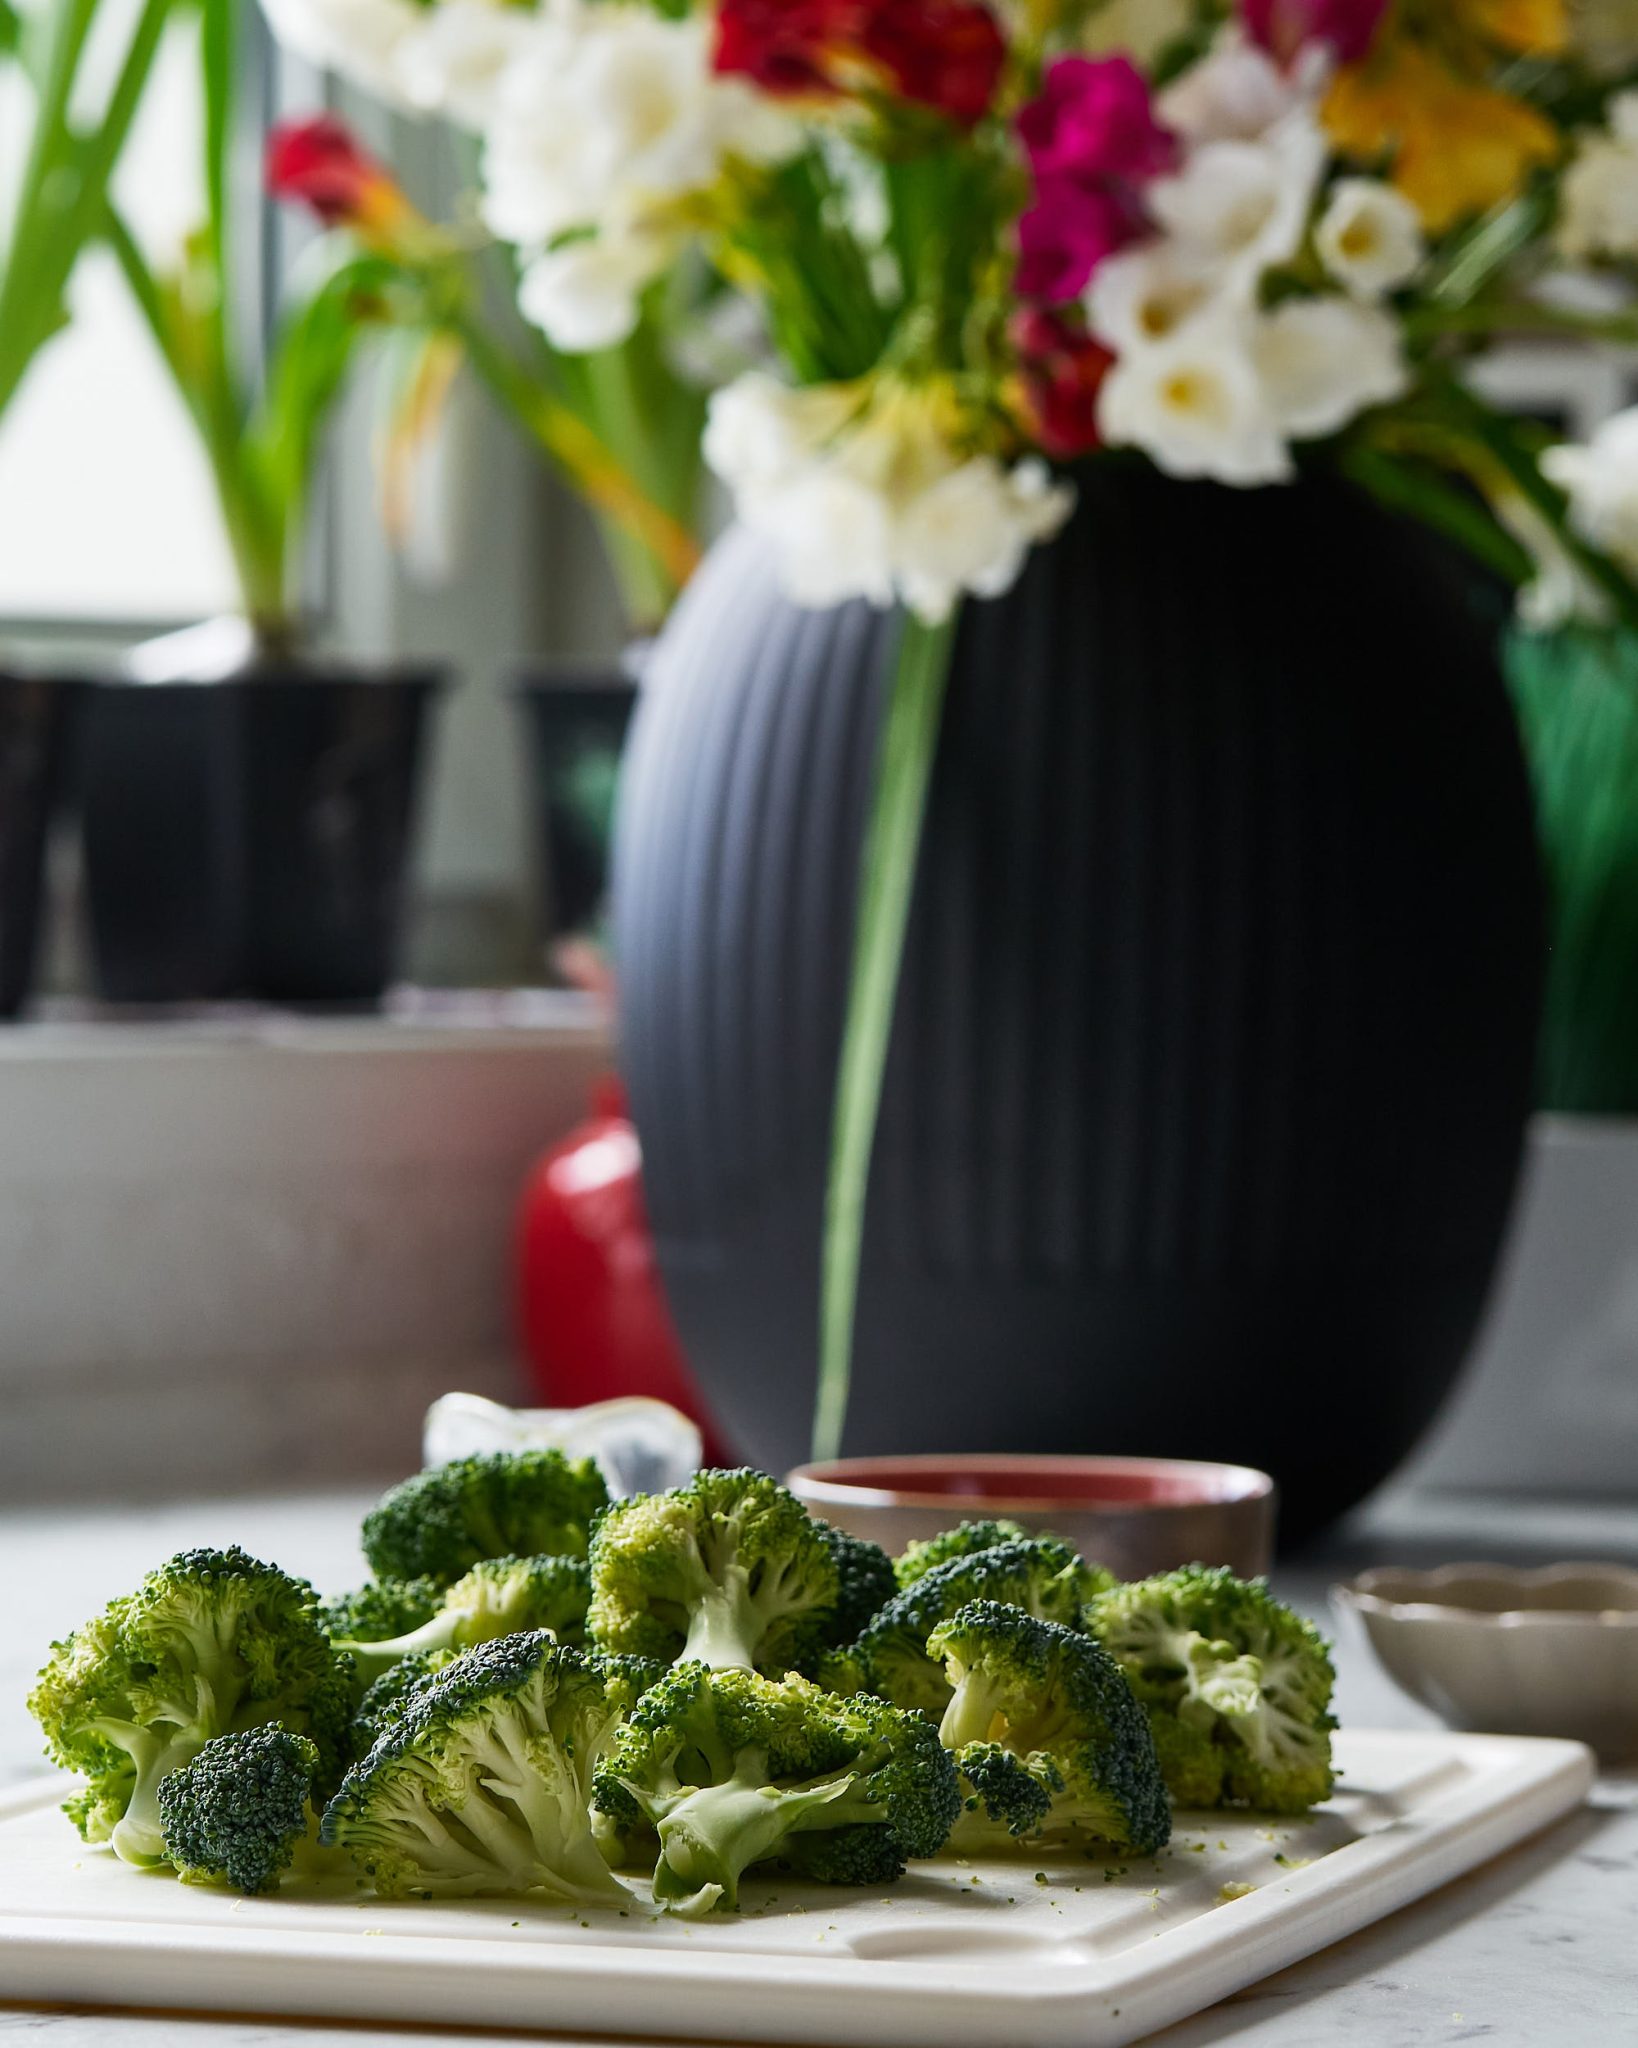 Tasty and Healthy Air fryer broccoli recipe